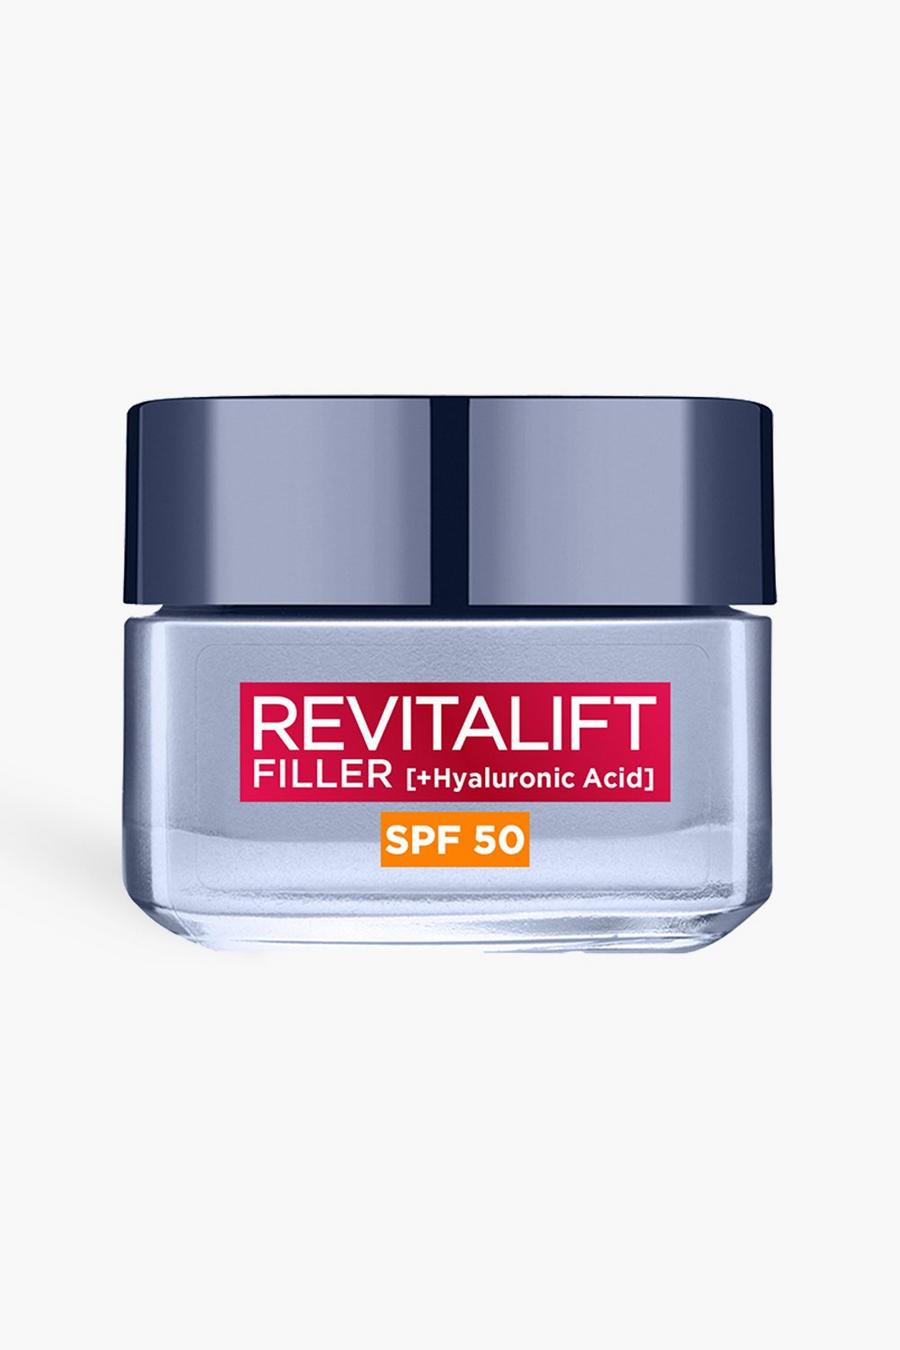 Purple viola L'Oréal Paris Revitalift Filler Replumping Anti-Ageing Hyaluronic Acid Cream With SPF 50, 50ml